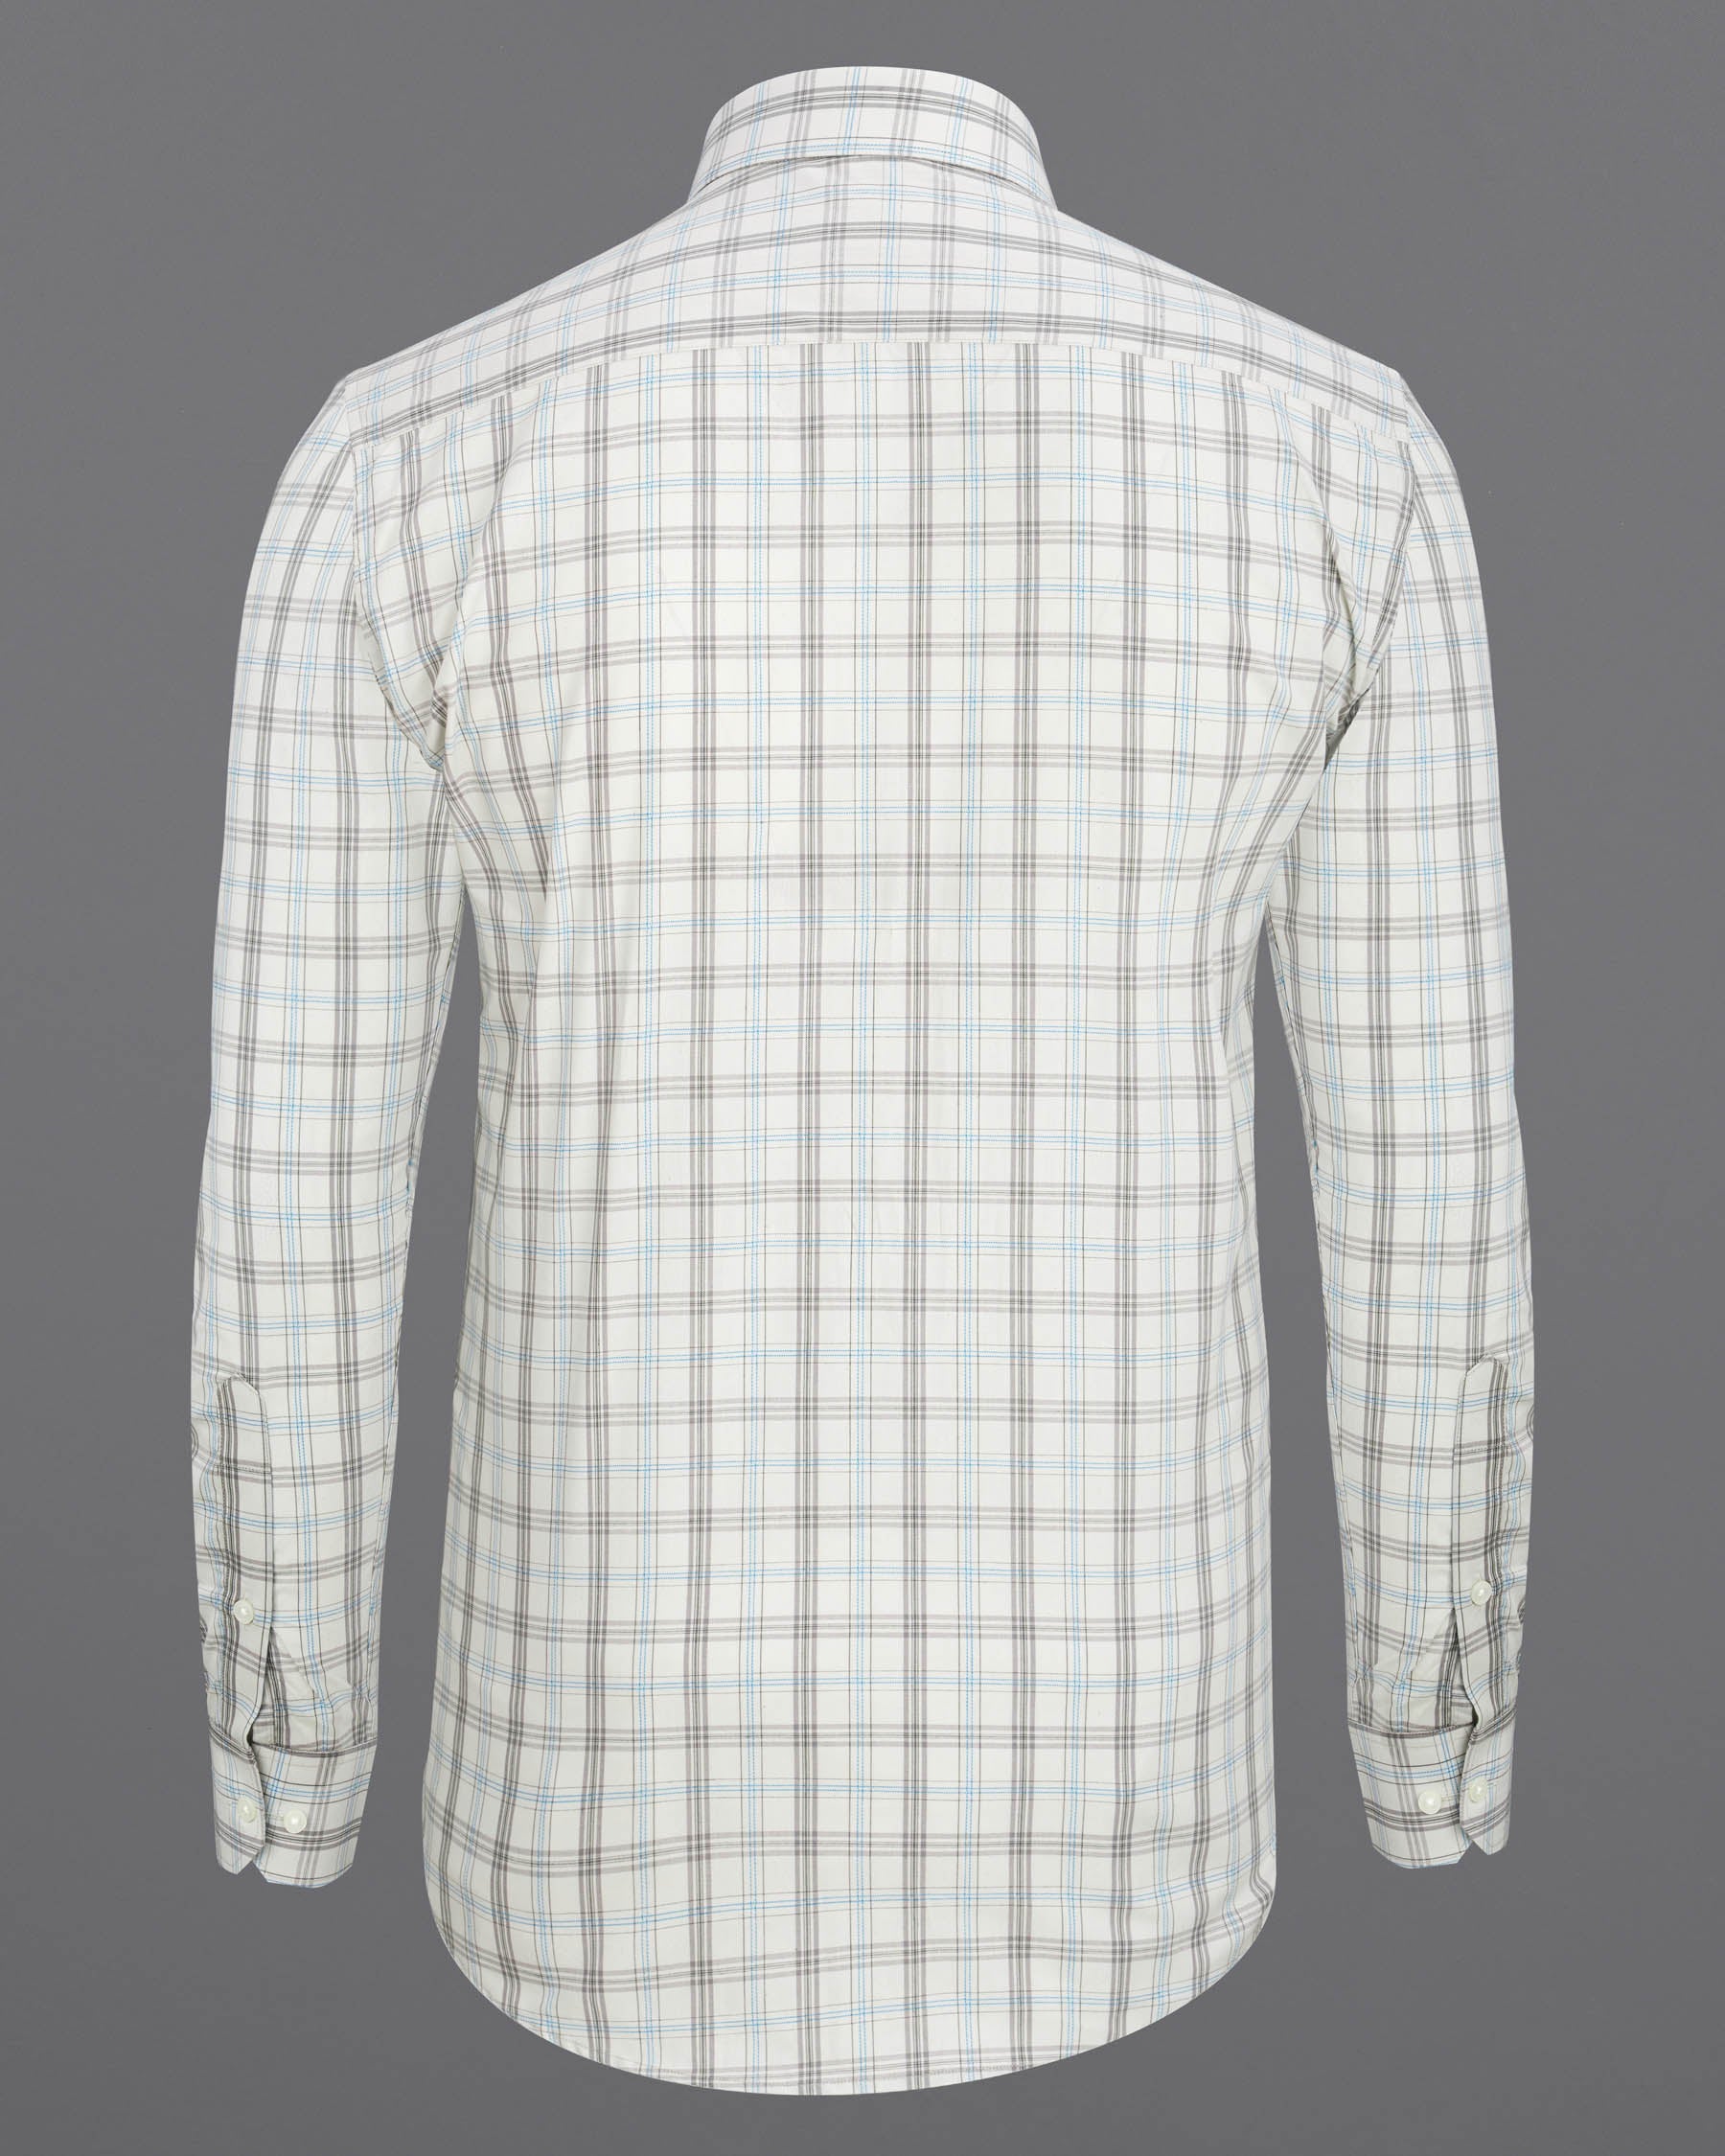 Cararra Plaid Premium Cotton Shirt 6567-38,6567-38,6567-39,6567-39,6567-40,6567-40,6567-42,6567-42,6567-44,6567-44,6567-46,6567-46,6567-48,6567-48,6567-50,6567-50,6567-52,6567-52